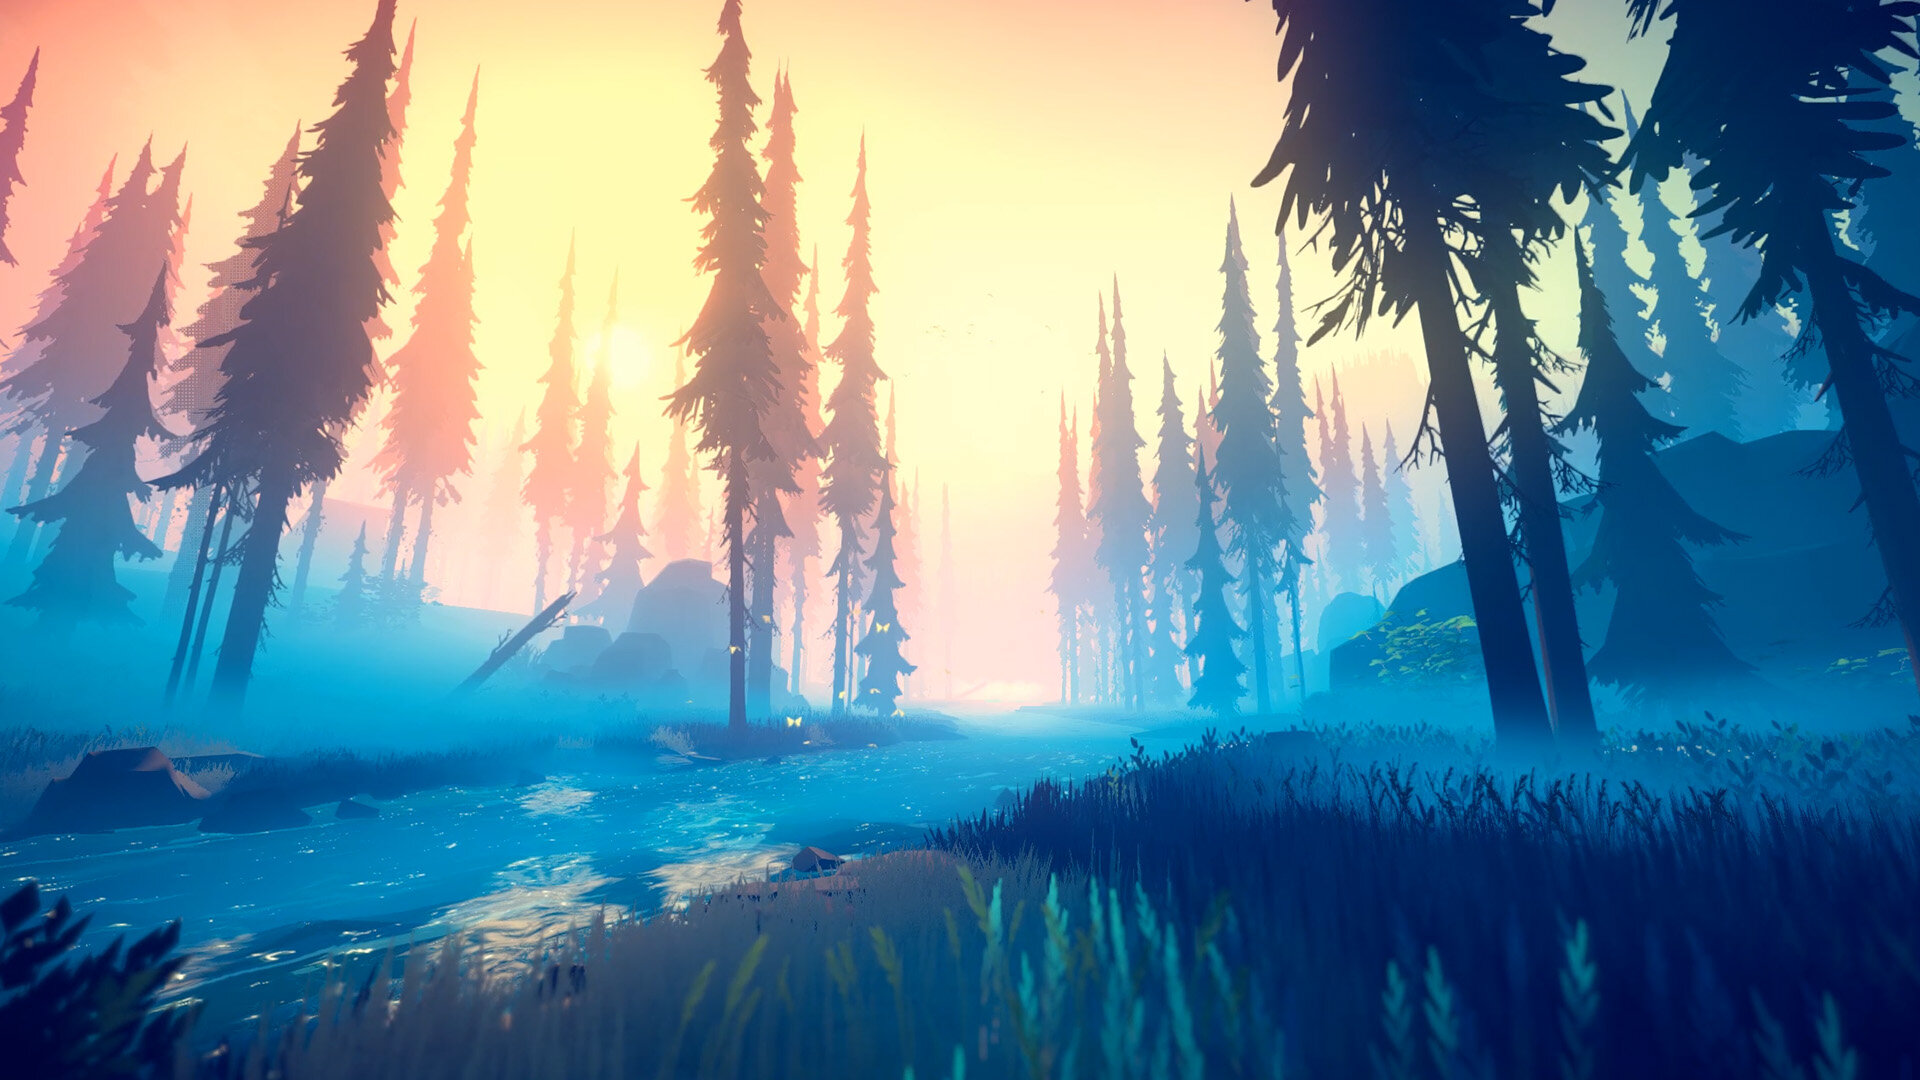 Among trees screenshot 6 6